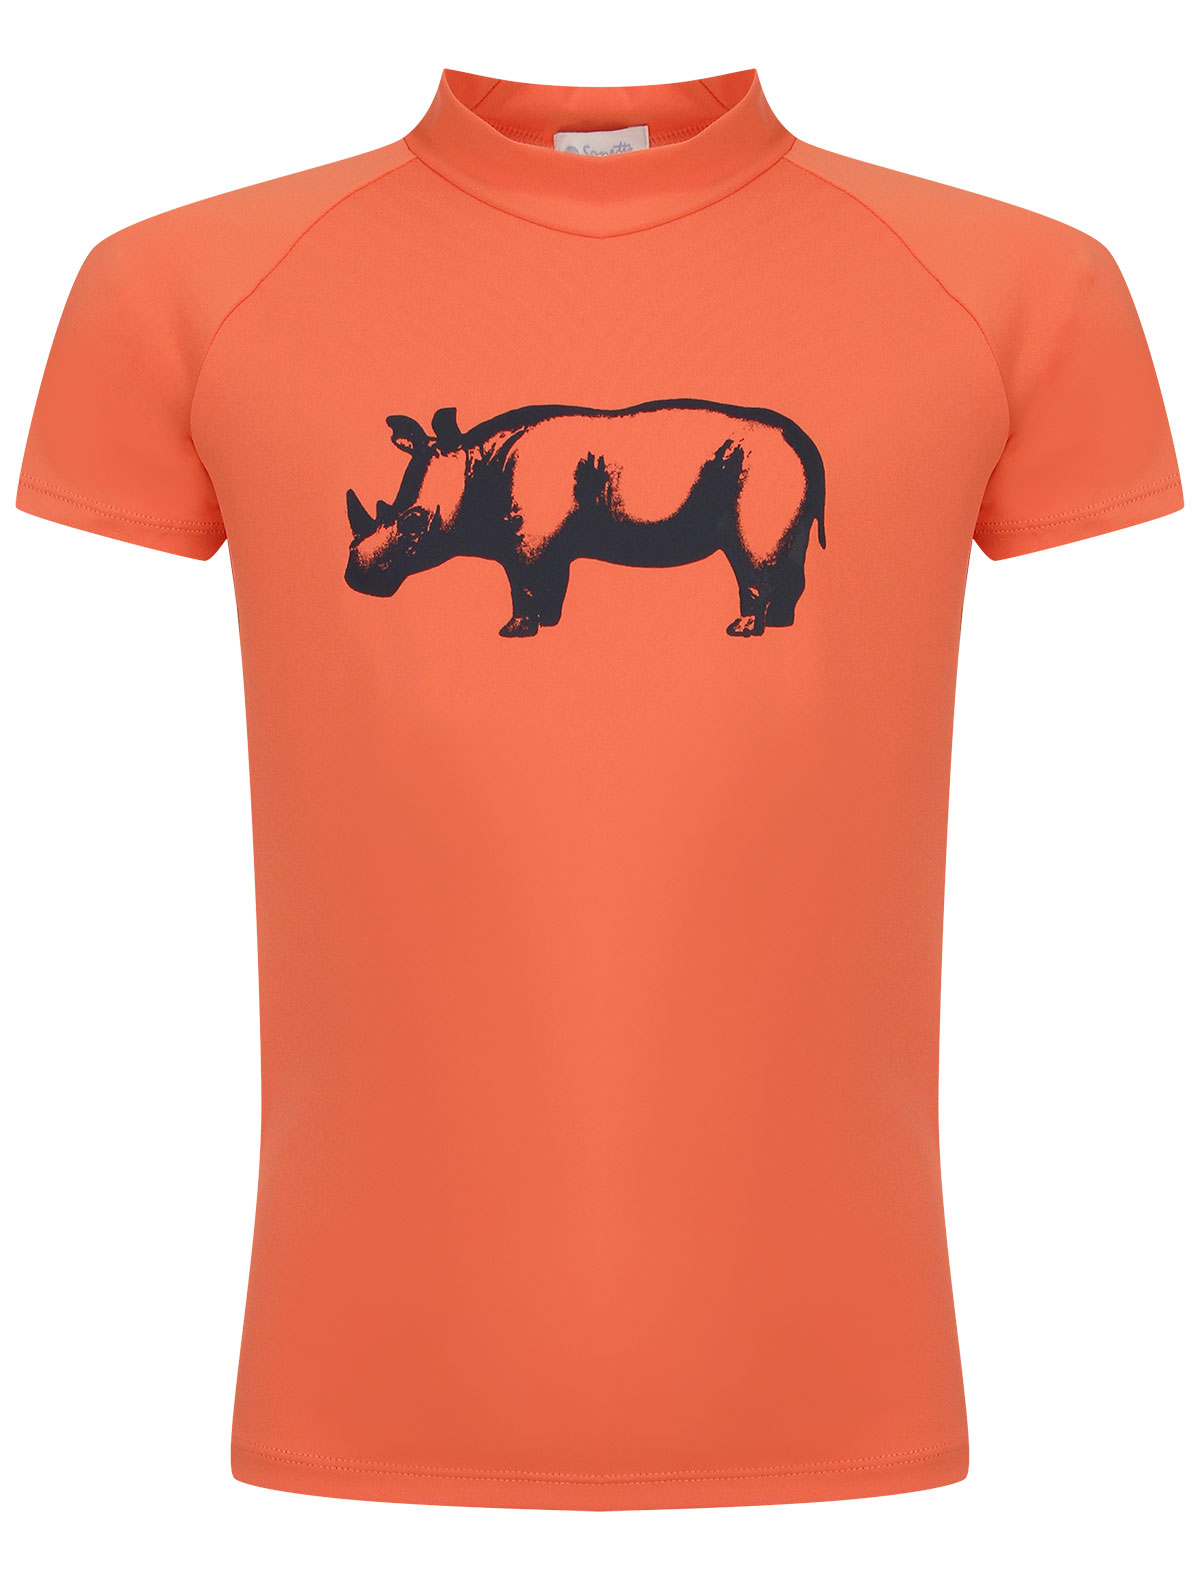 футболка sanetta для мальчика, оранжевая